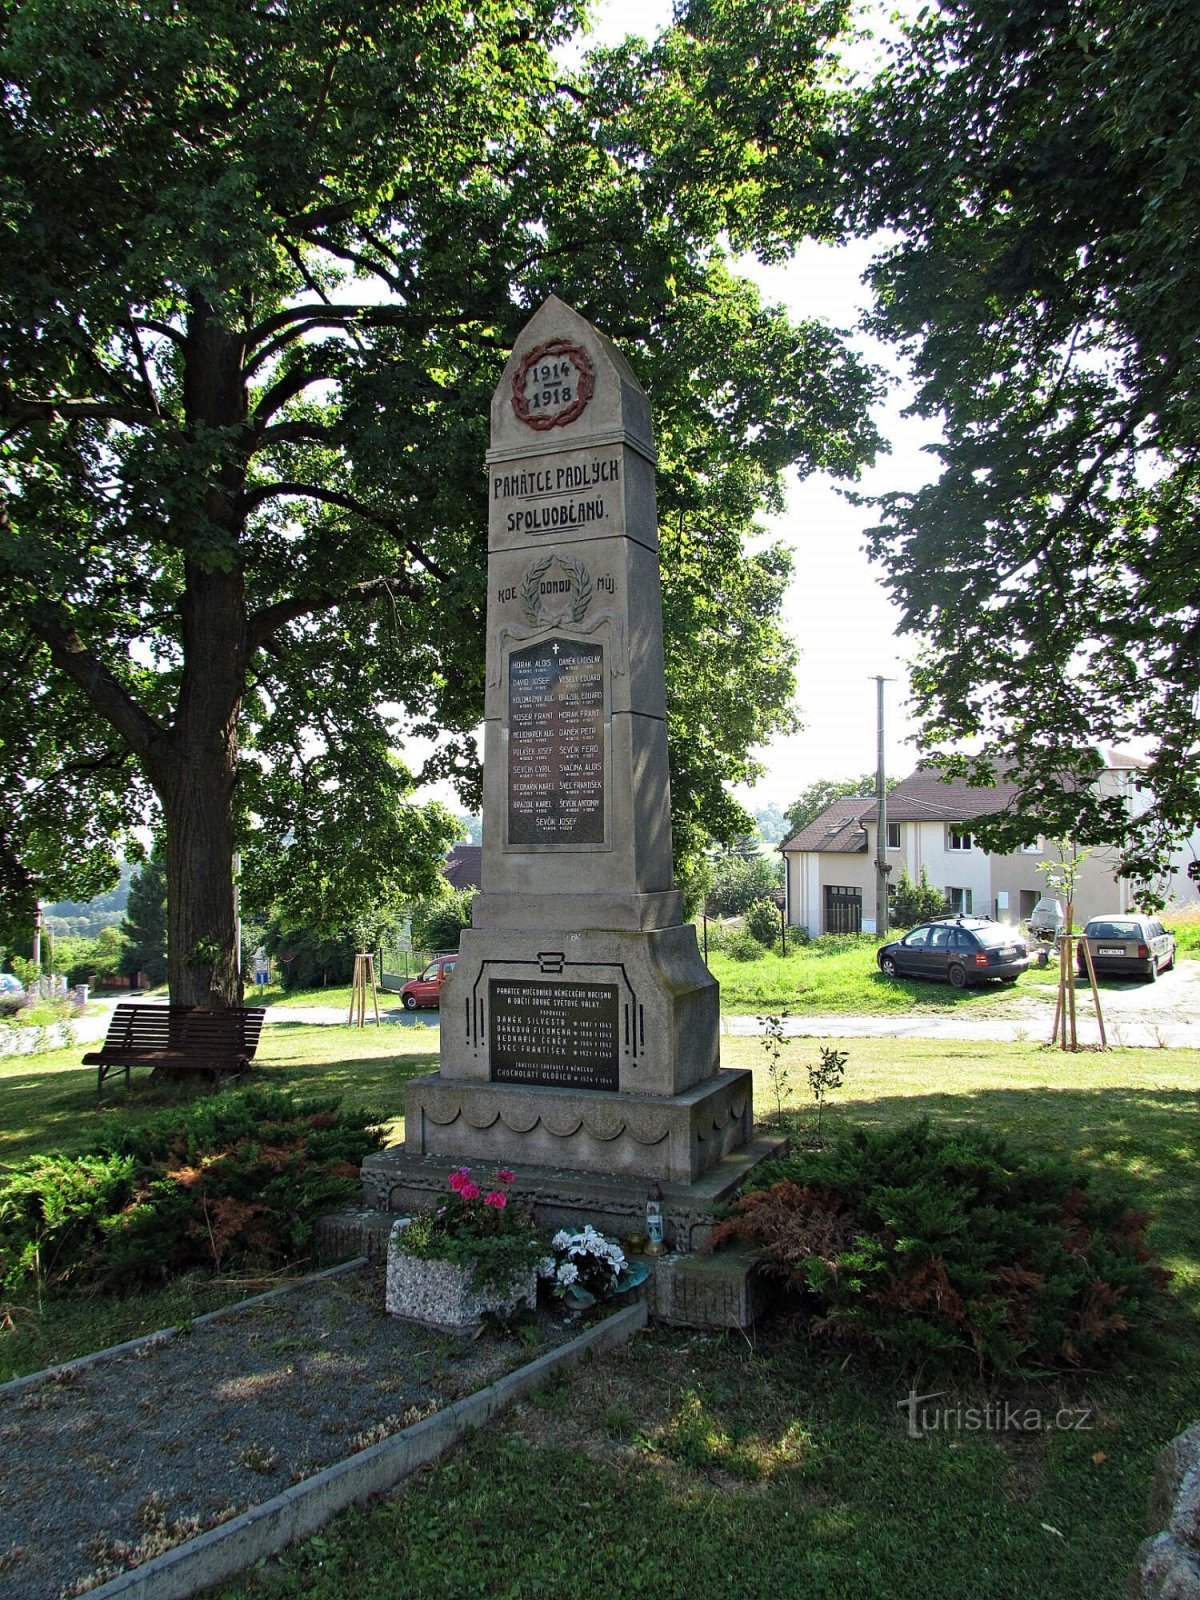 Kostelan monument